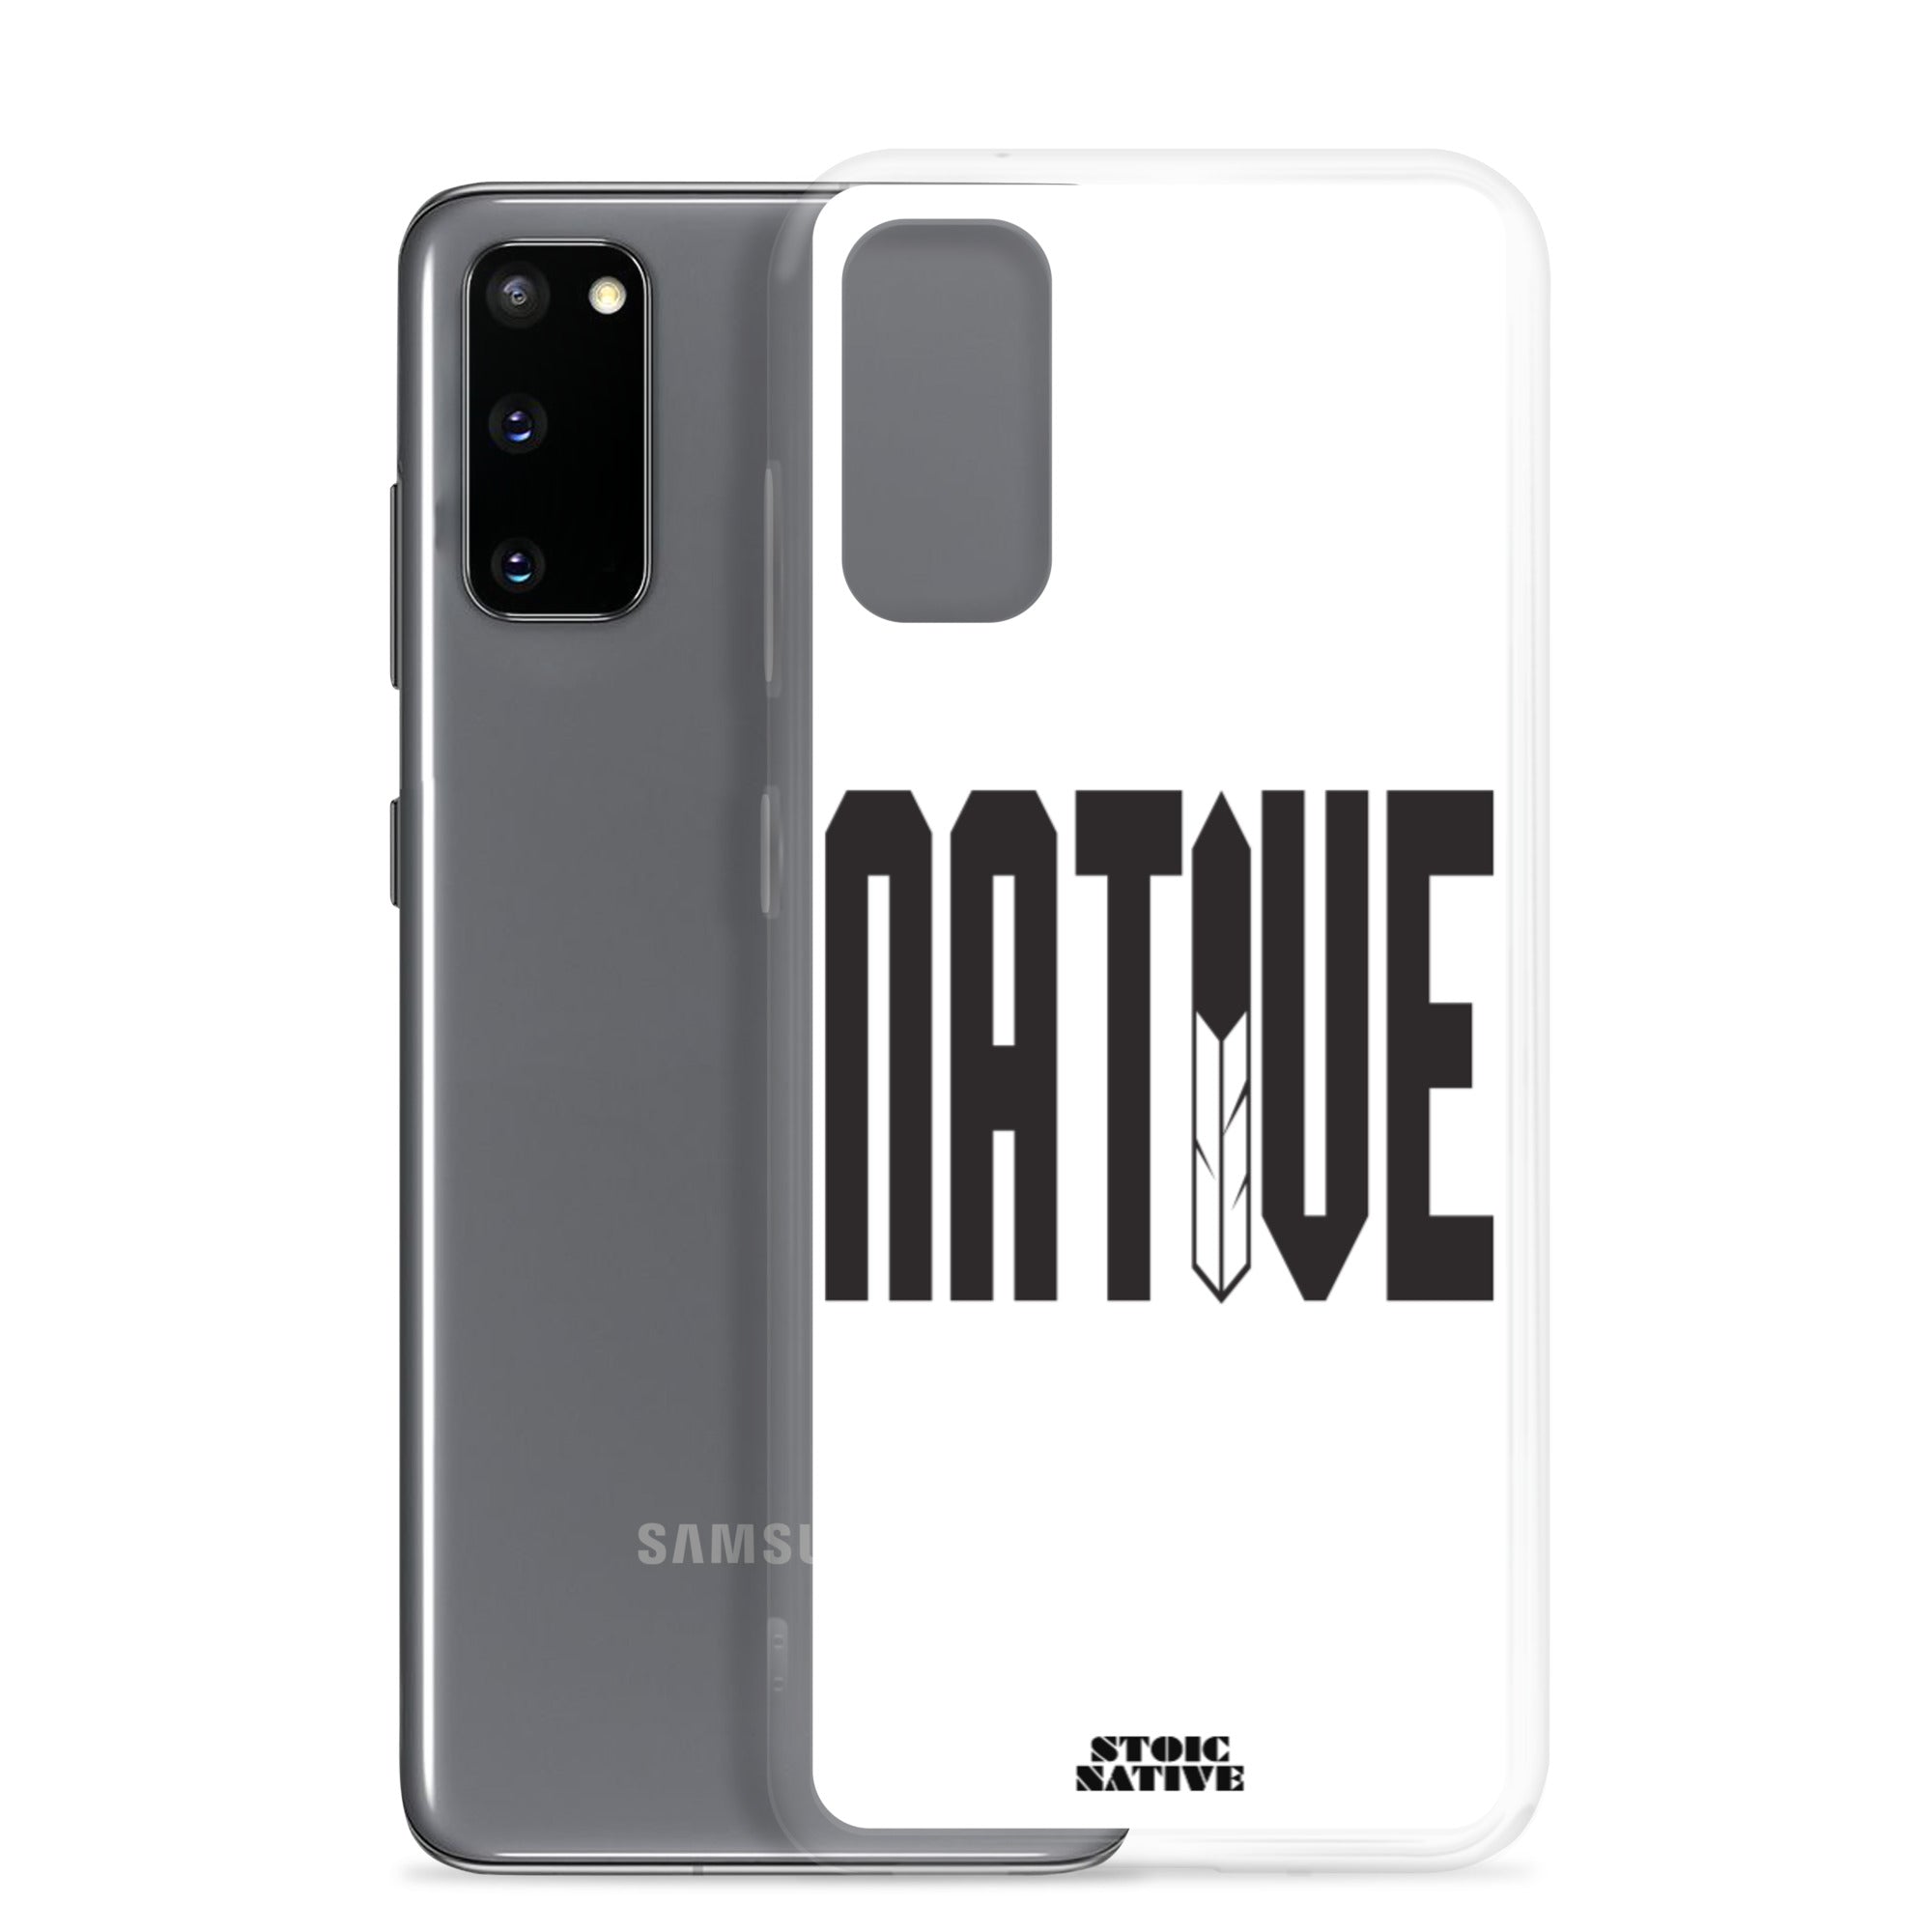 Native Samsung Case